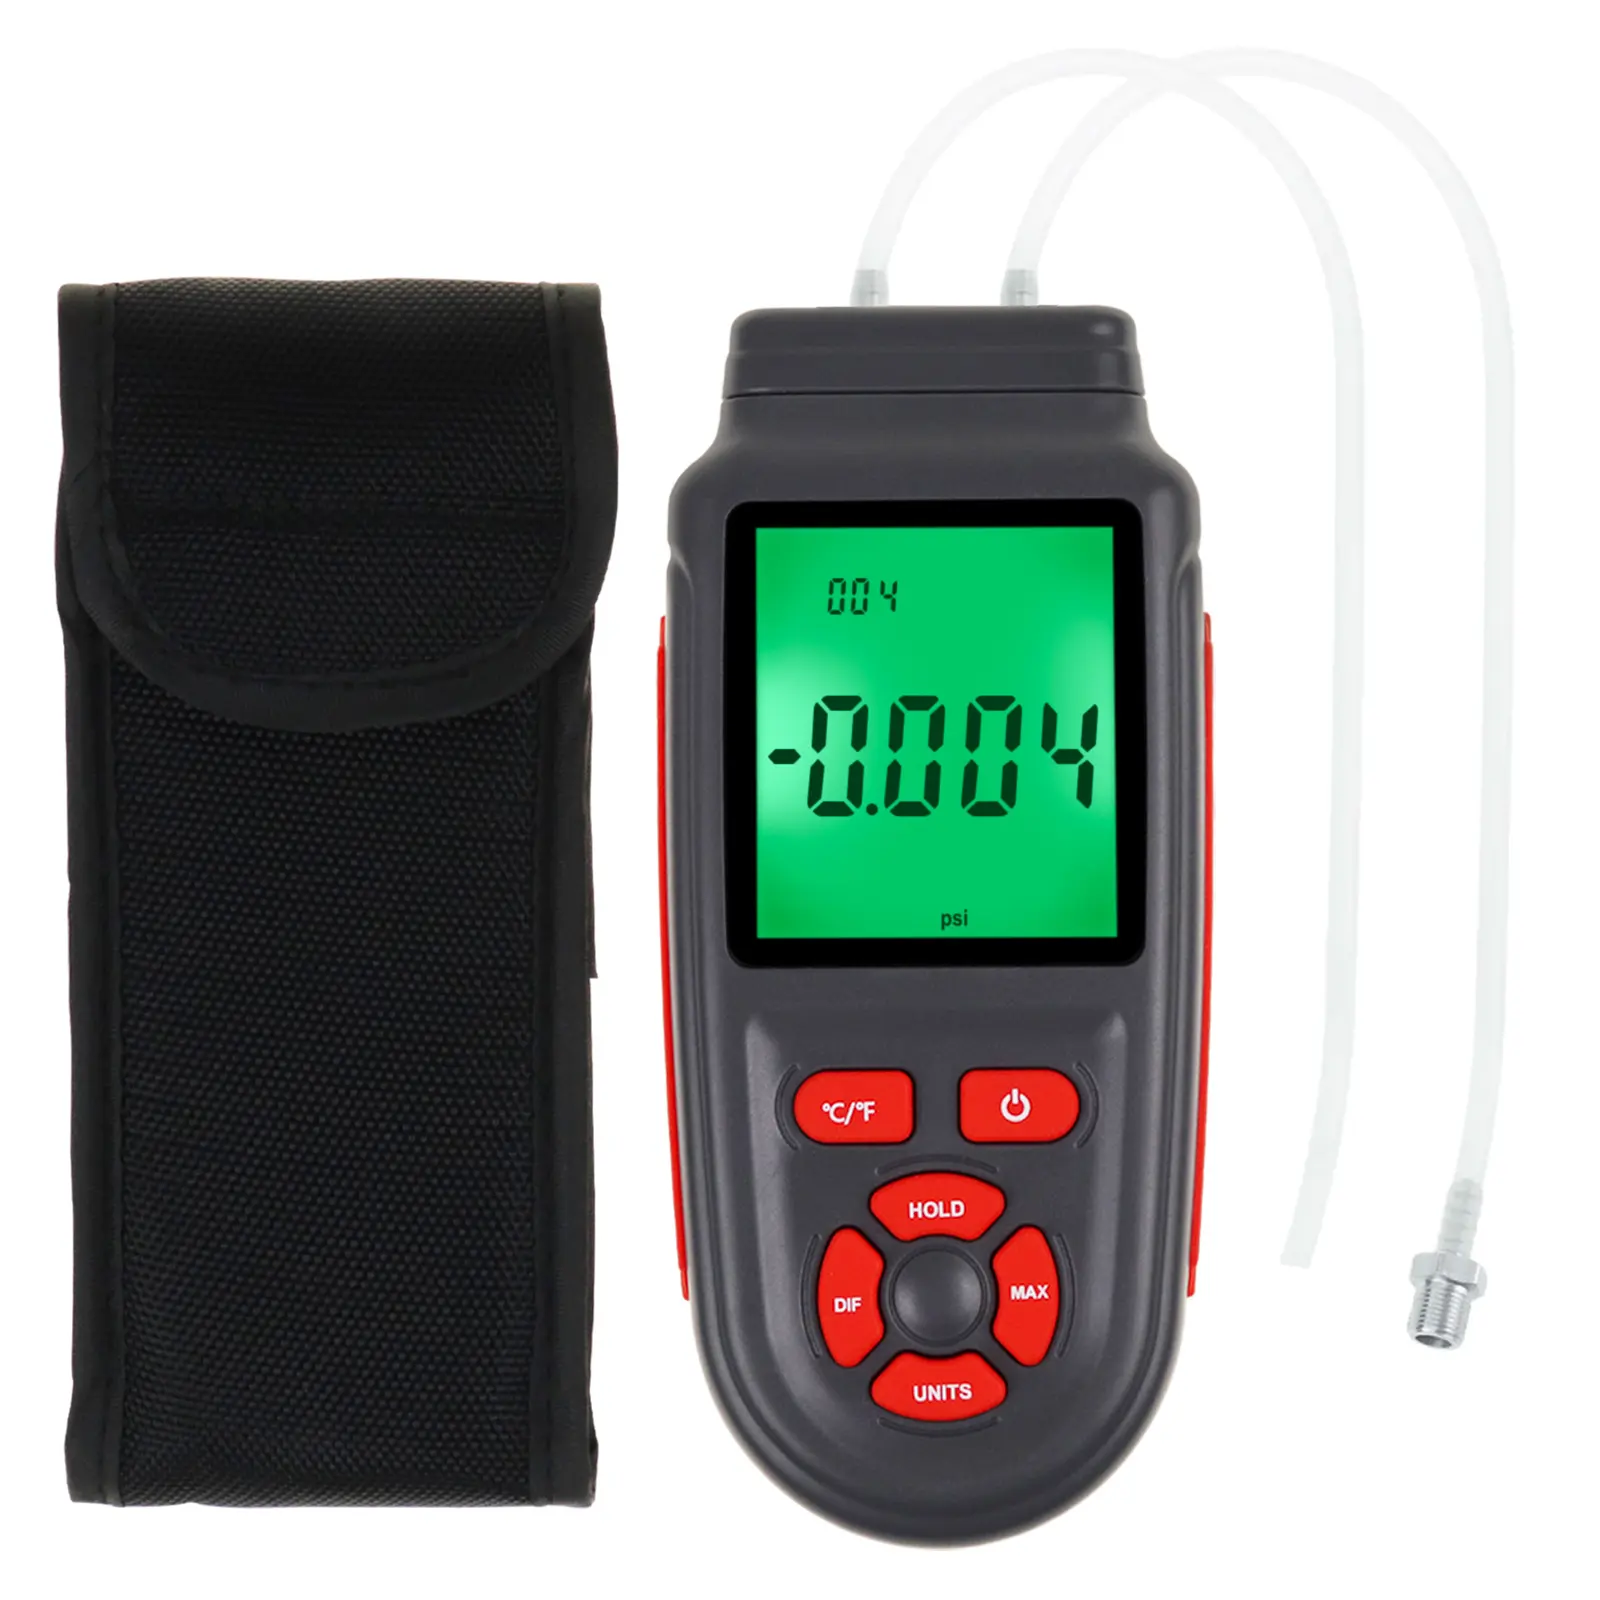 Dual Differential Manometer Gas Pressure Tester Meter, Backlight 12 Selectable Units Air Pressure Gauge W/ Data Storage Function